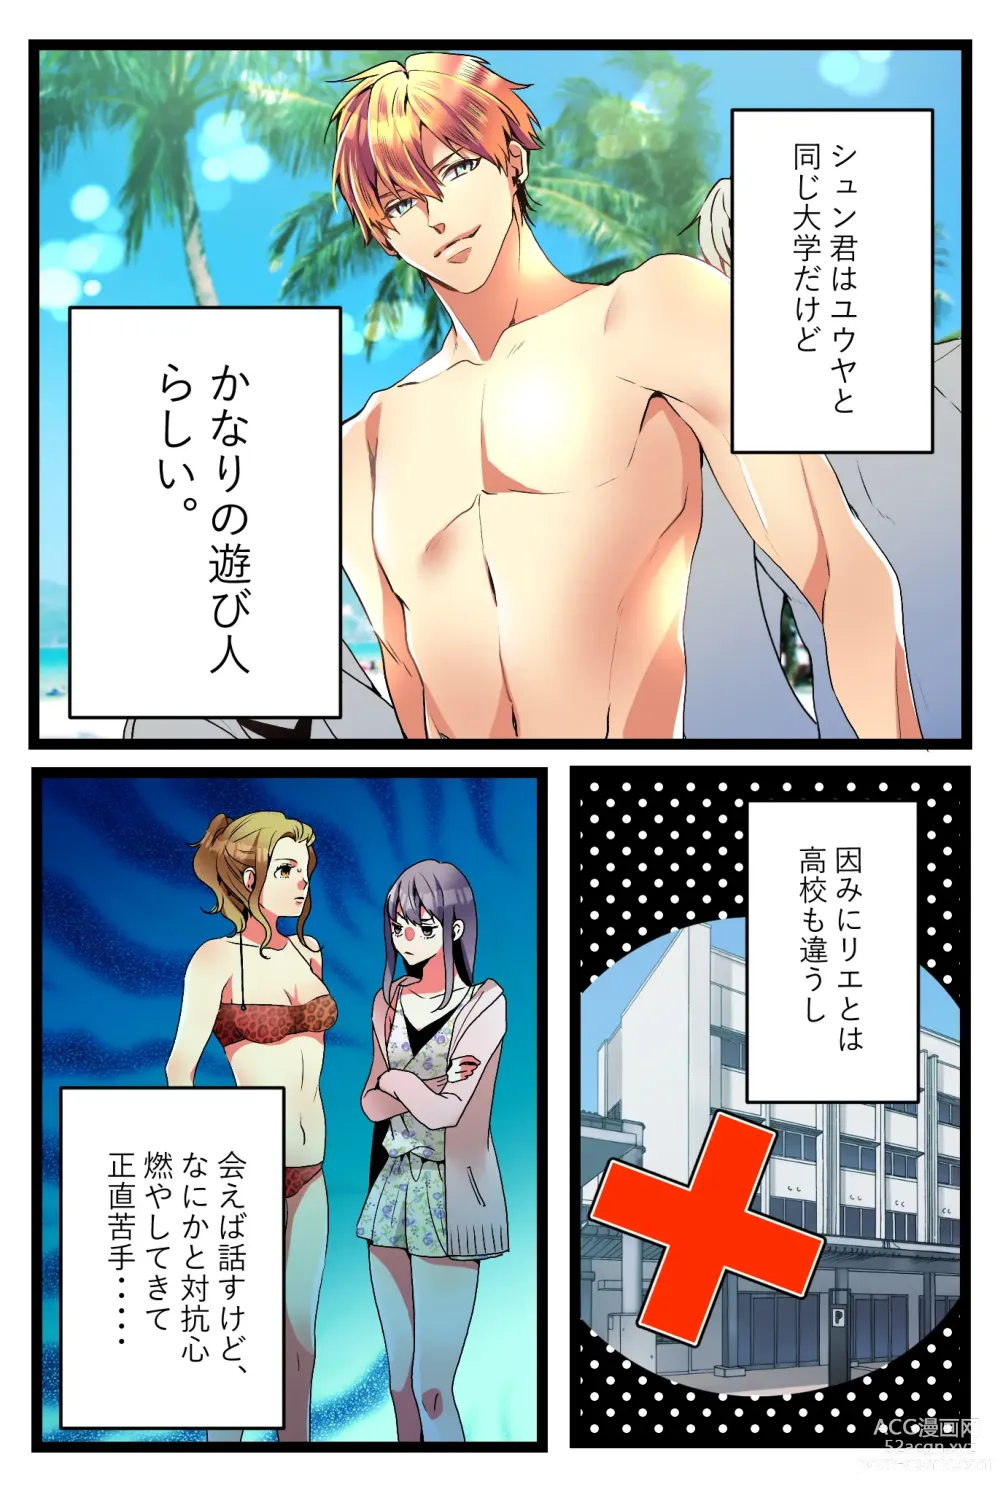 Page 5 of doujinshi NTR Gal. -Umi de Tomodachi to W Date no Hazu ga, Netorare Aokan-chuu-